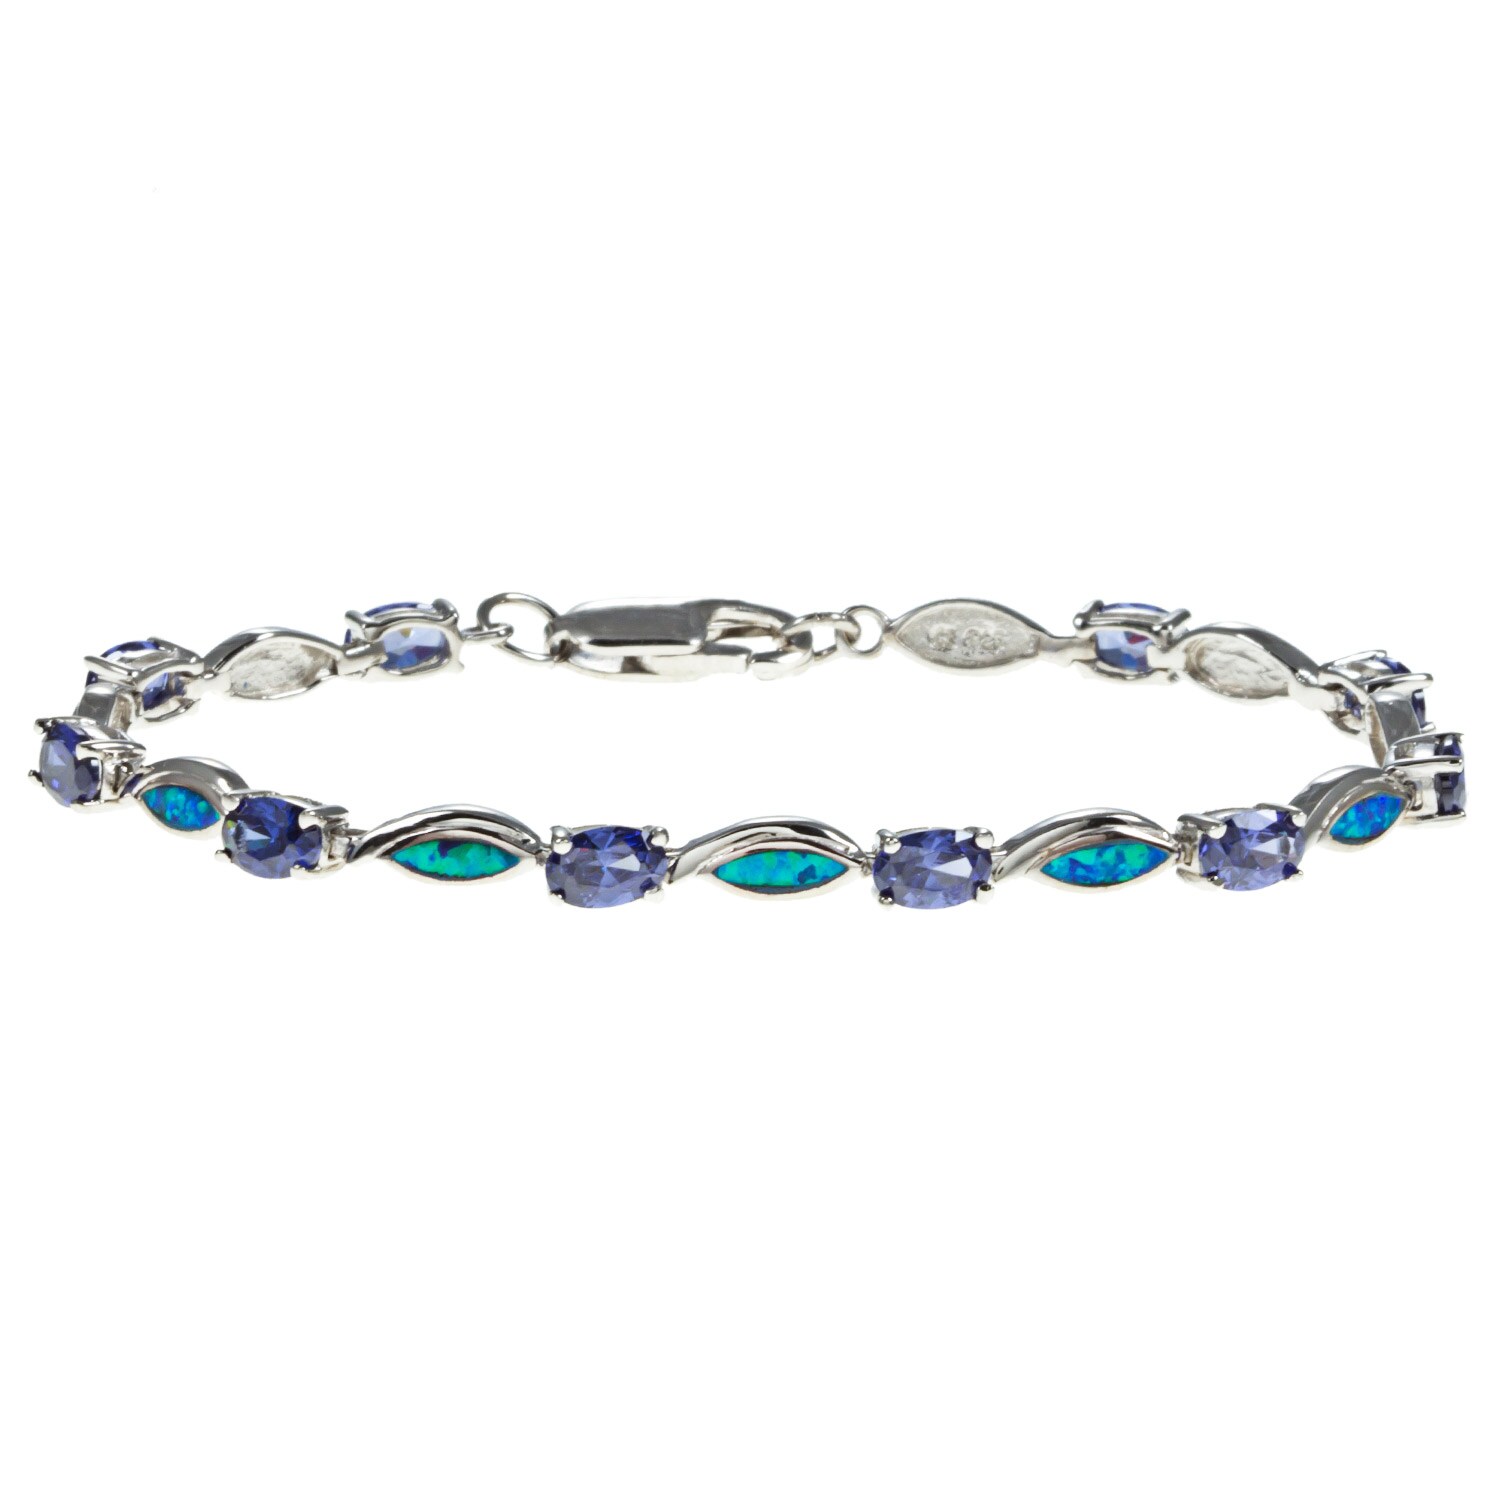 White Opalite Sterling Silver Overlay Bangle/Bracelet Free Size Gift Jewelry Handmade Jewelry 